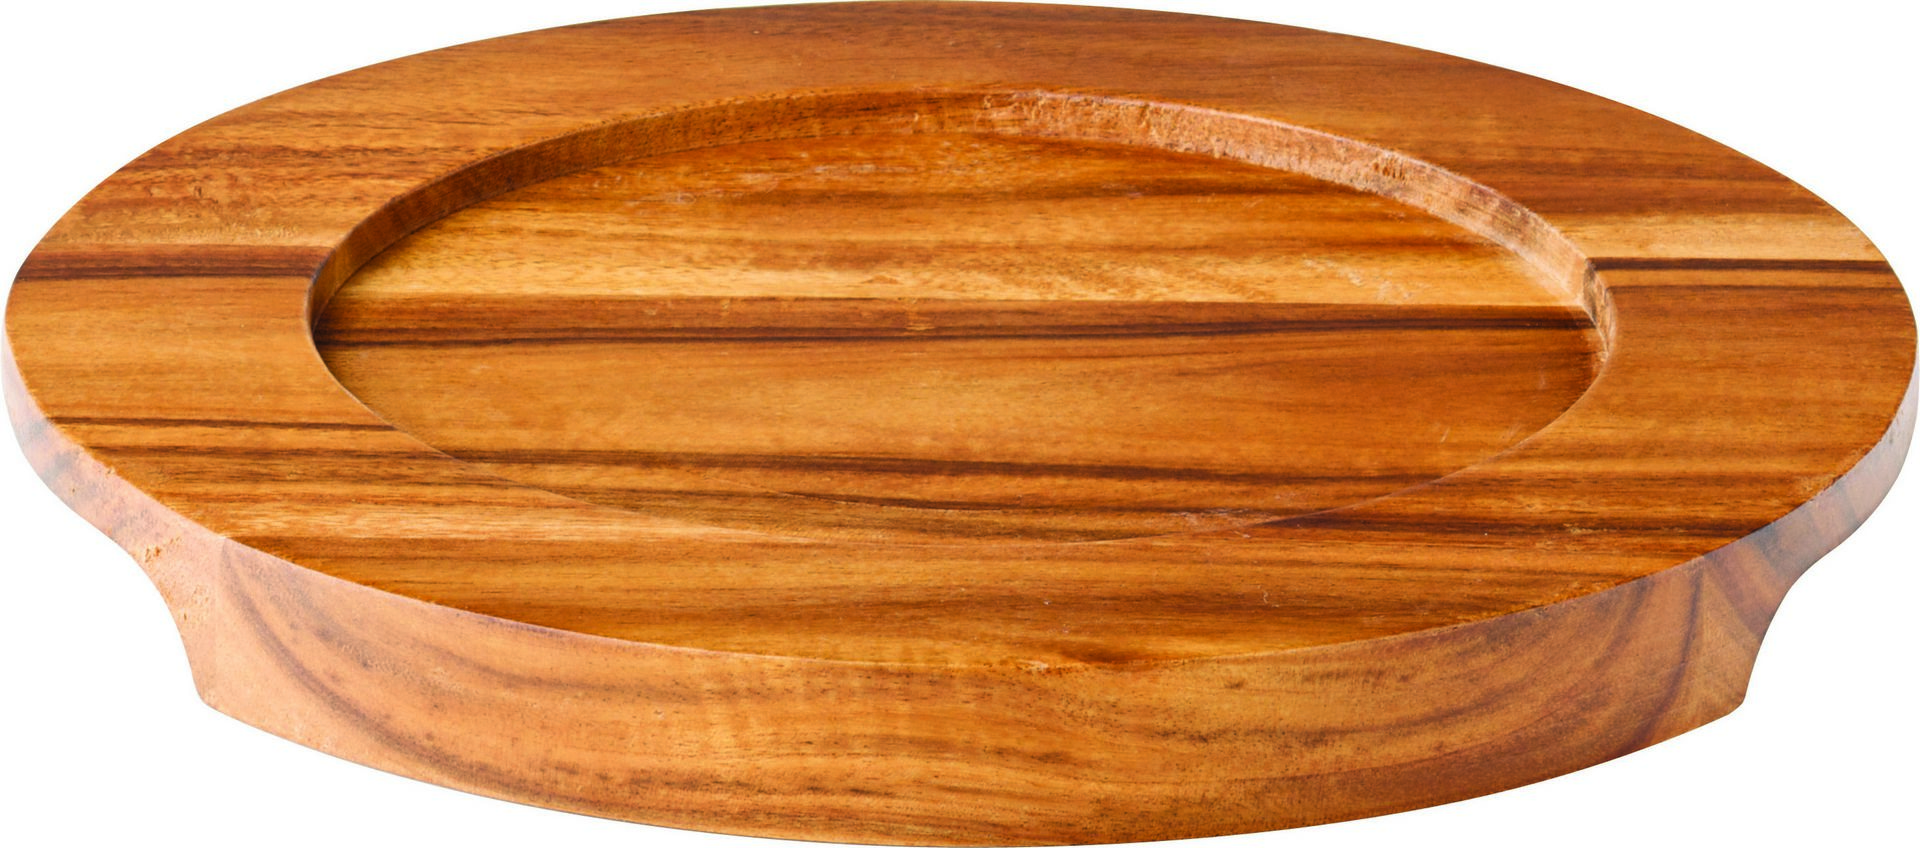 Round Wood Board 7.5